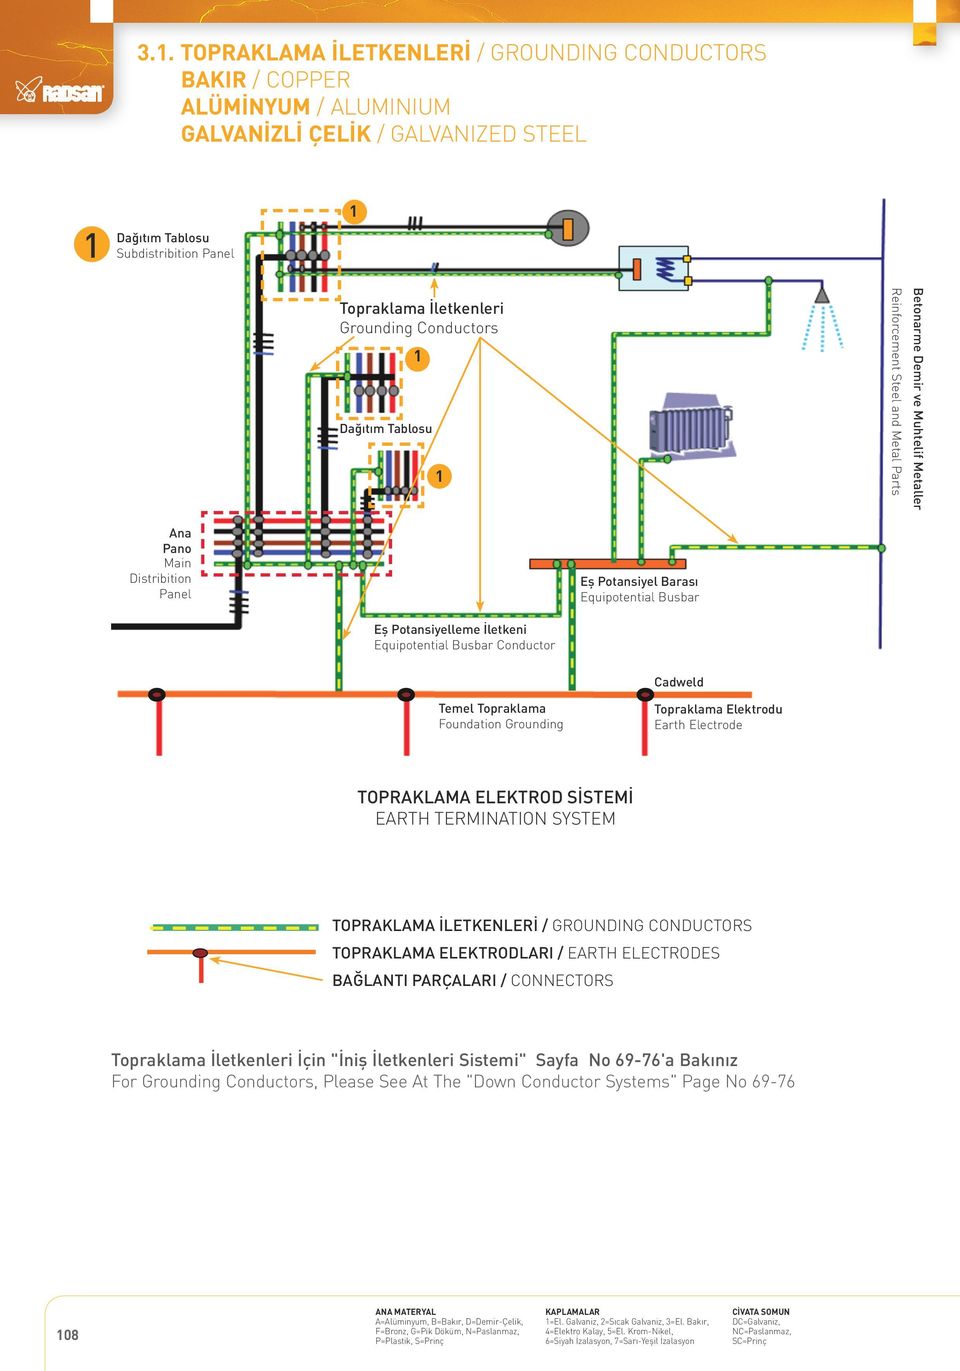 İletkeni Equipotential Busbar Conductor Cadweld Temel Topraklama Foundation Grounding Topraklama Elektrodu TOPRAKLAMA ELEKTROD Earth Electrode SİSTEMİ / EARTH TERMINATION SYSTEM TOPRAKLAMA ELEKTROD